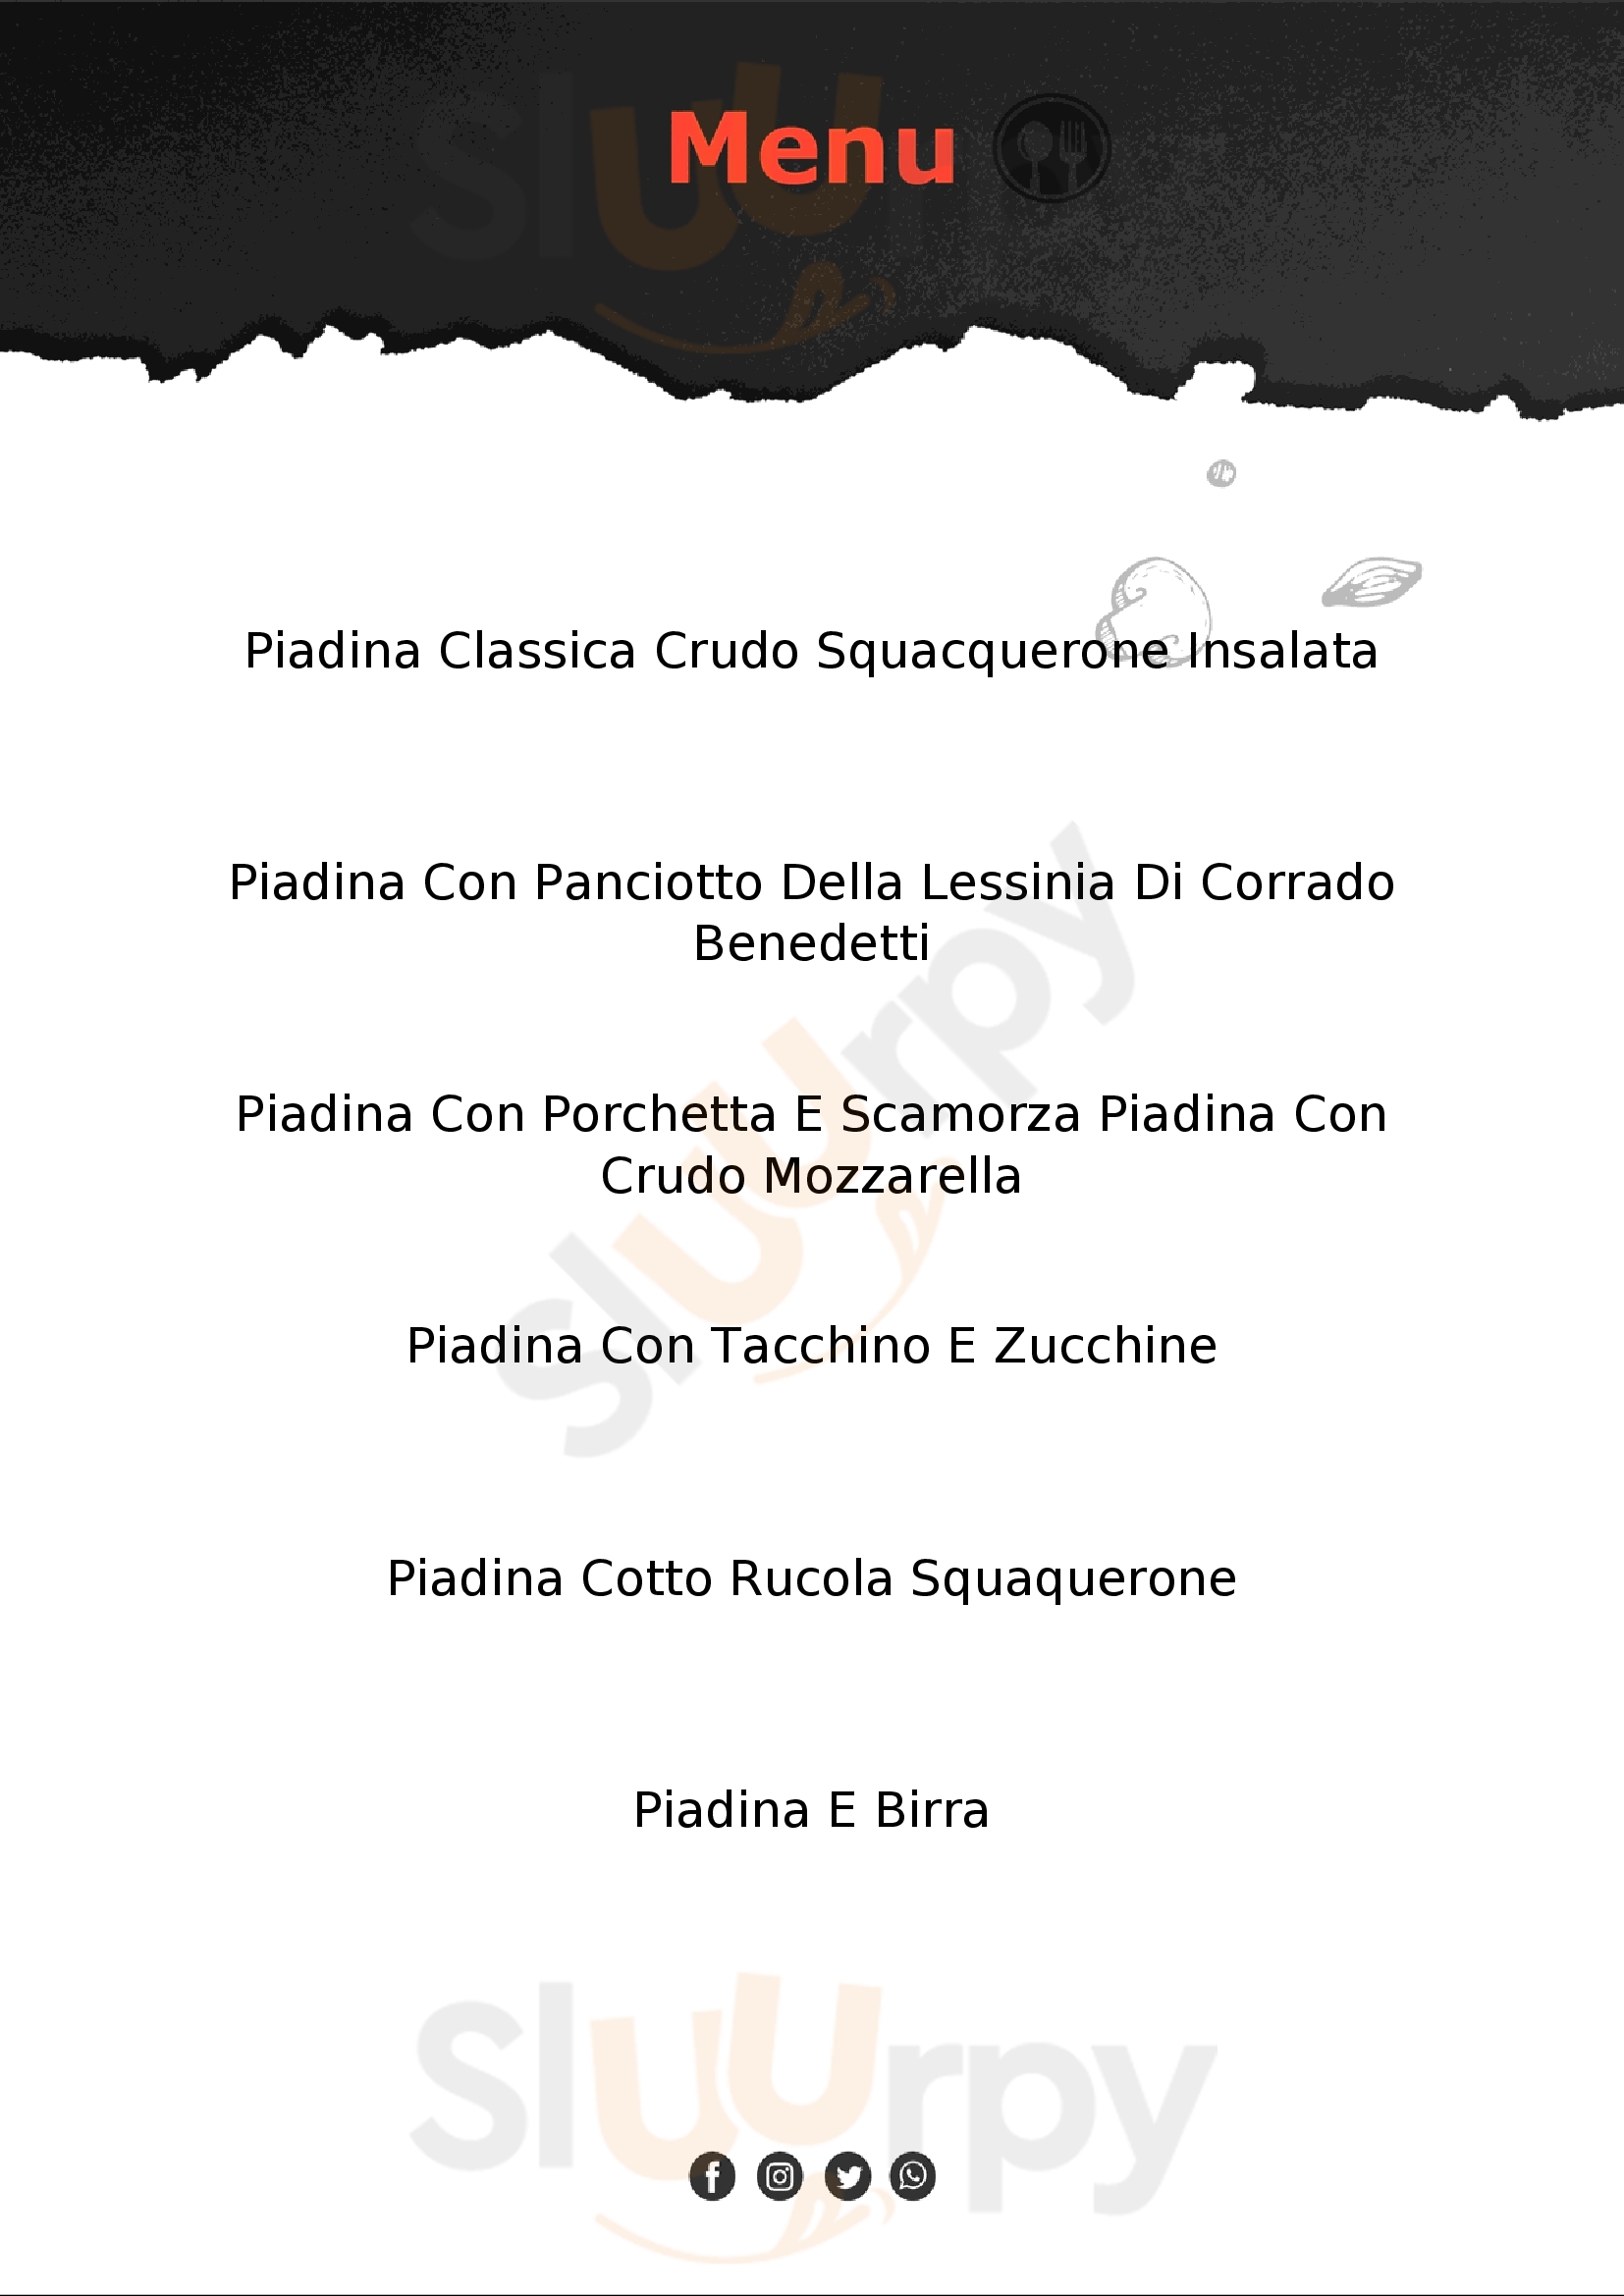 Bacchabundus Piadineria Artigianale - Via Leoni Verona menù 1 pagina